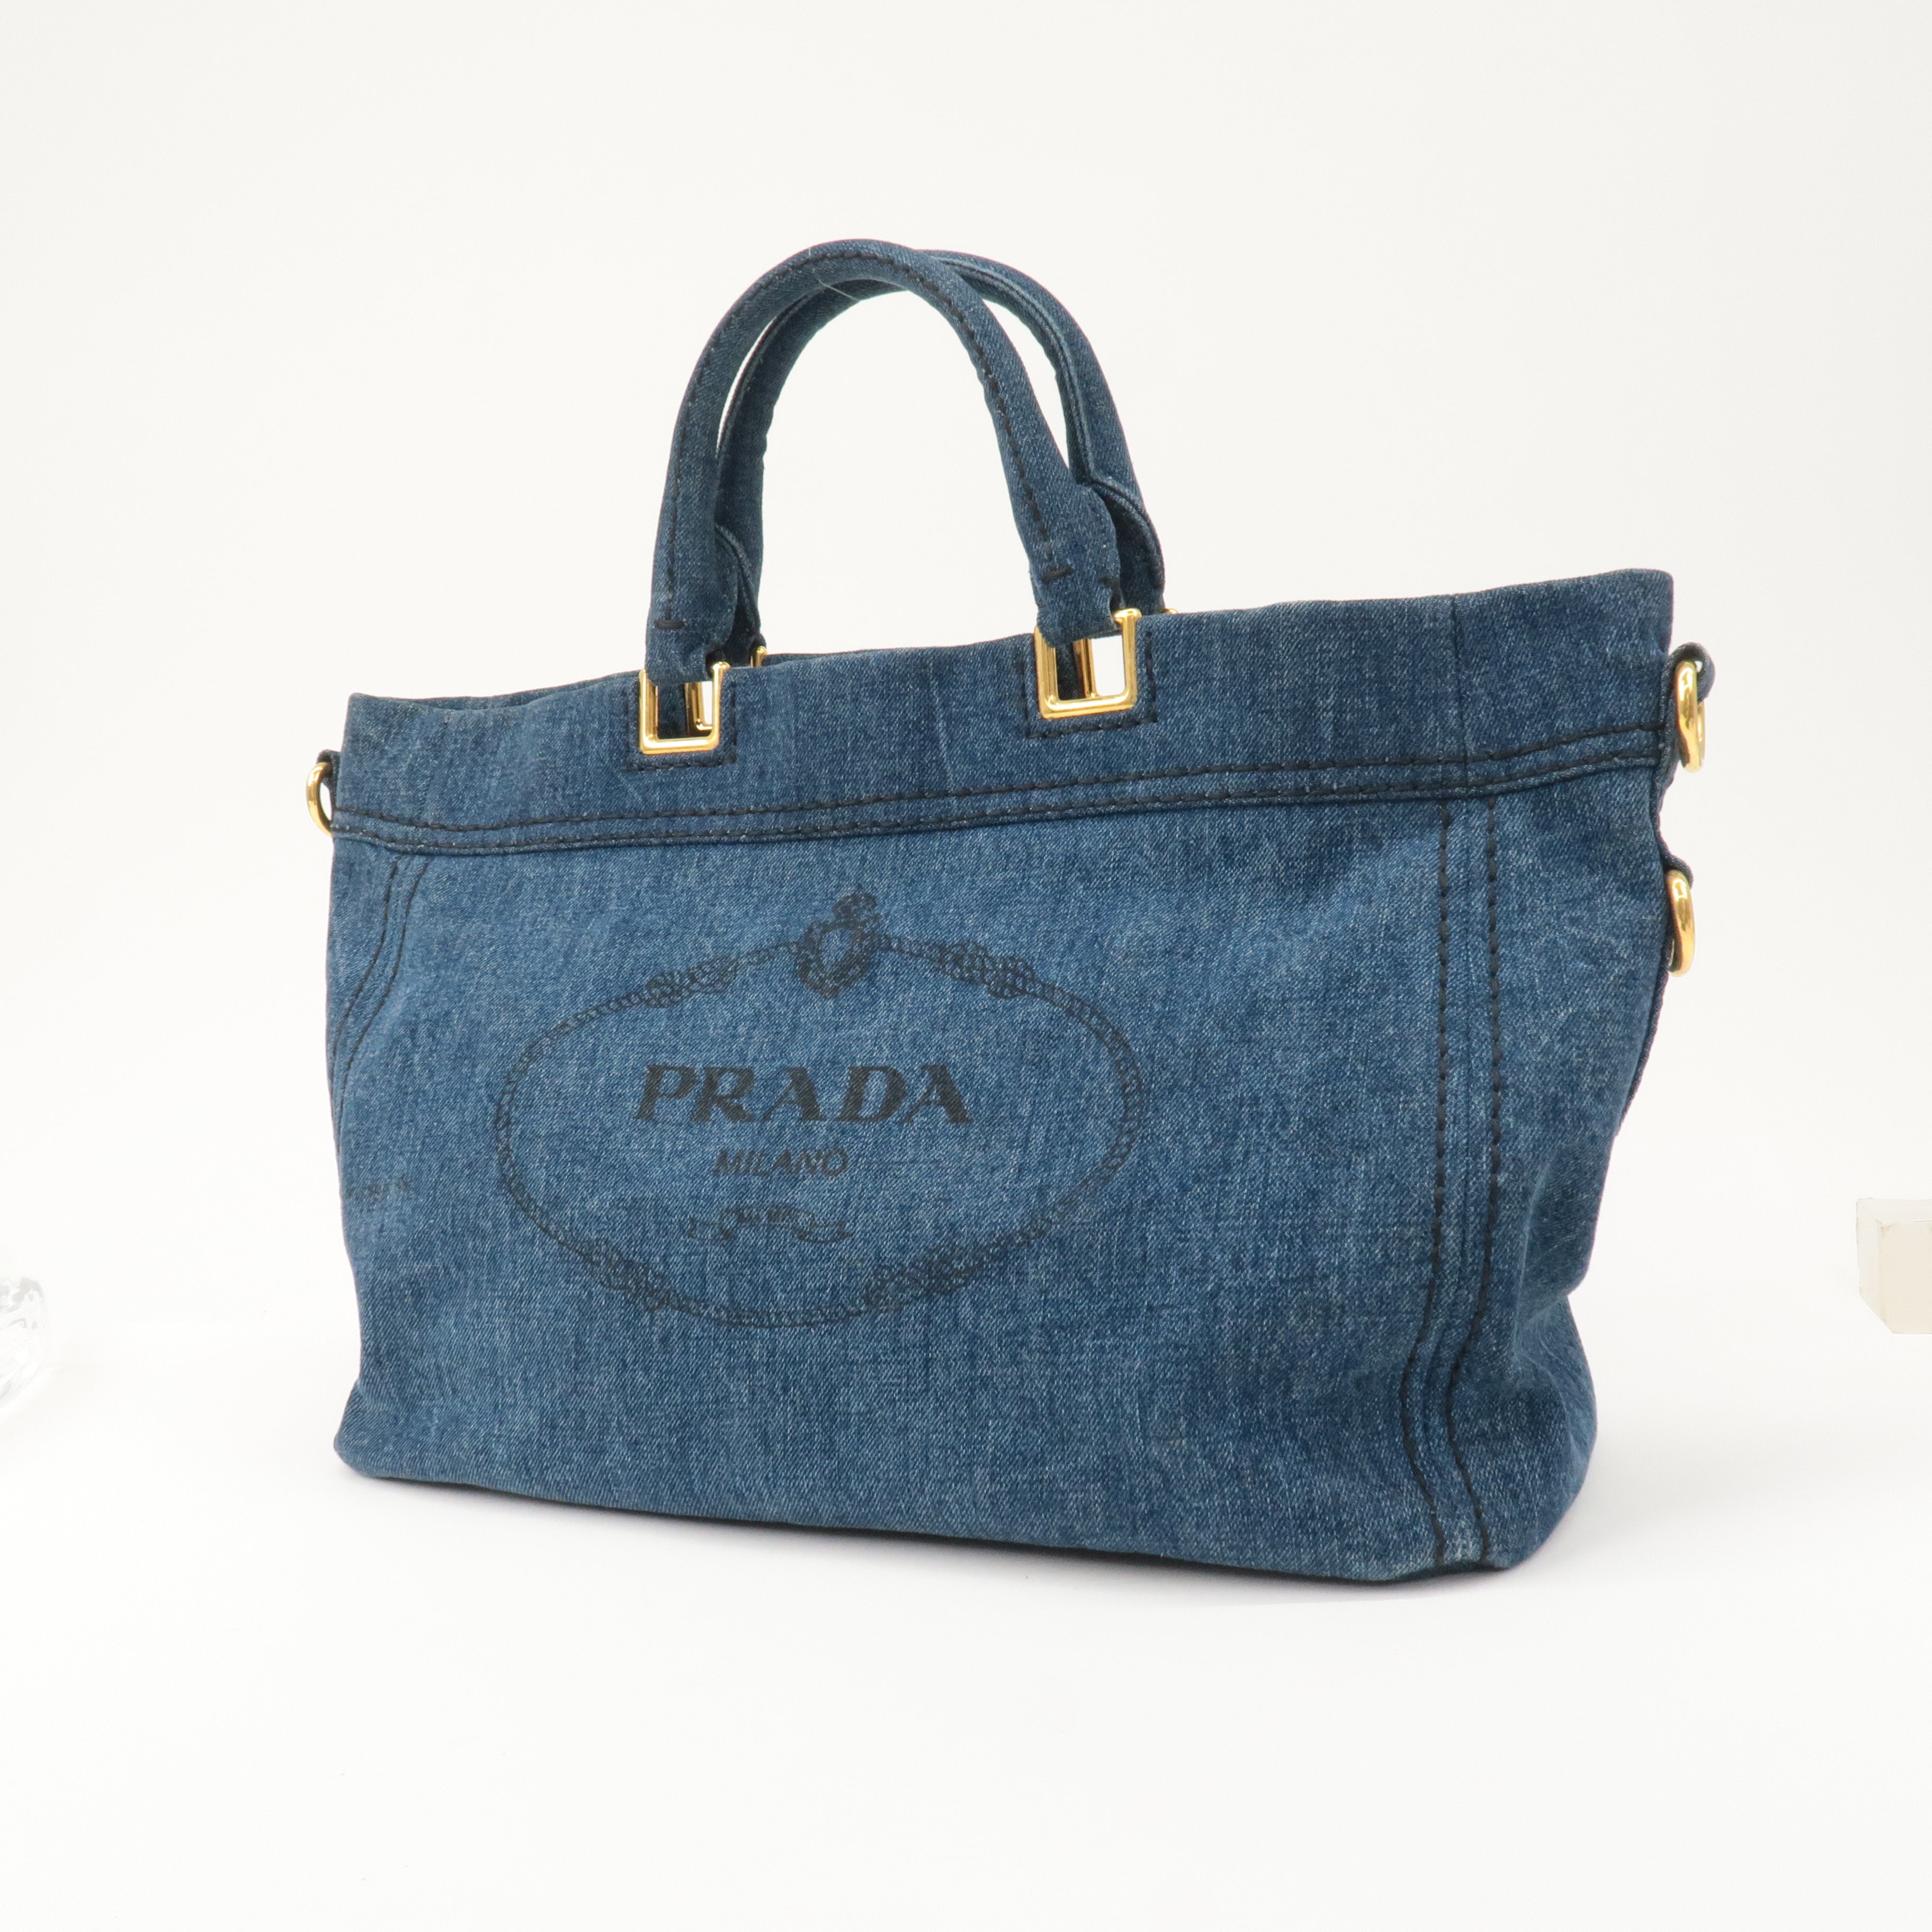 Bottega Veneta - Arco Denim Tote Bag in Blue Bottega Veneta